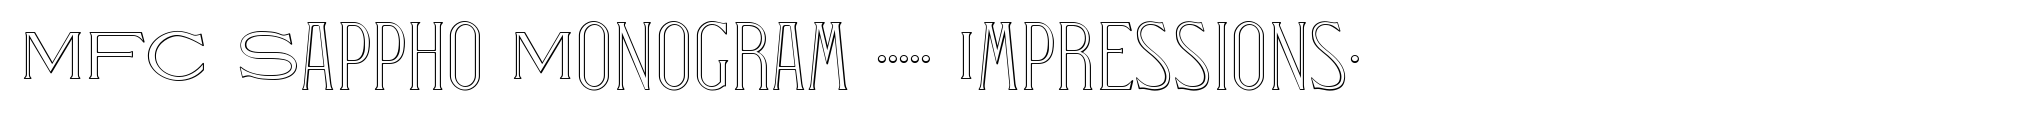 MFC Sappho Monogram (1000 Impressions) image